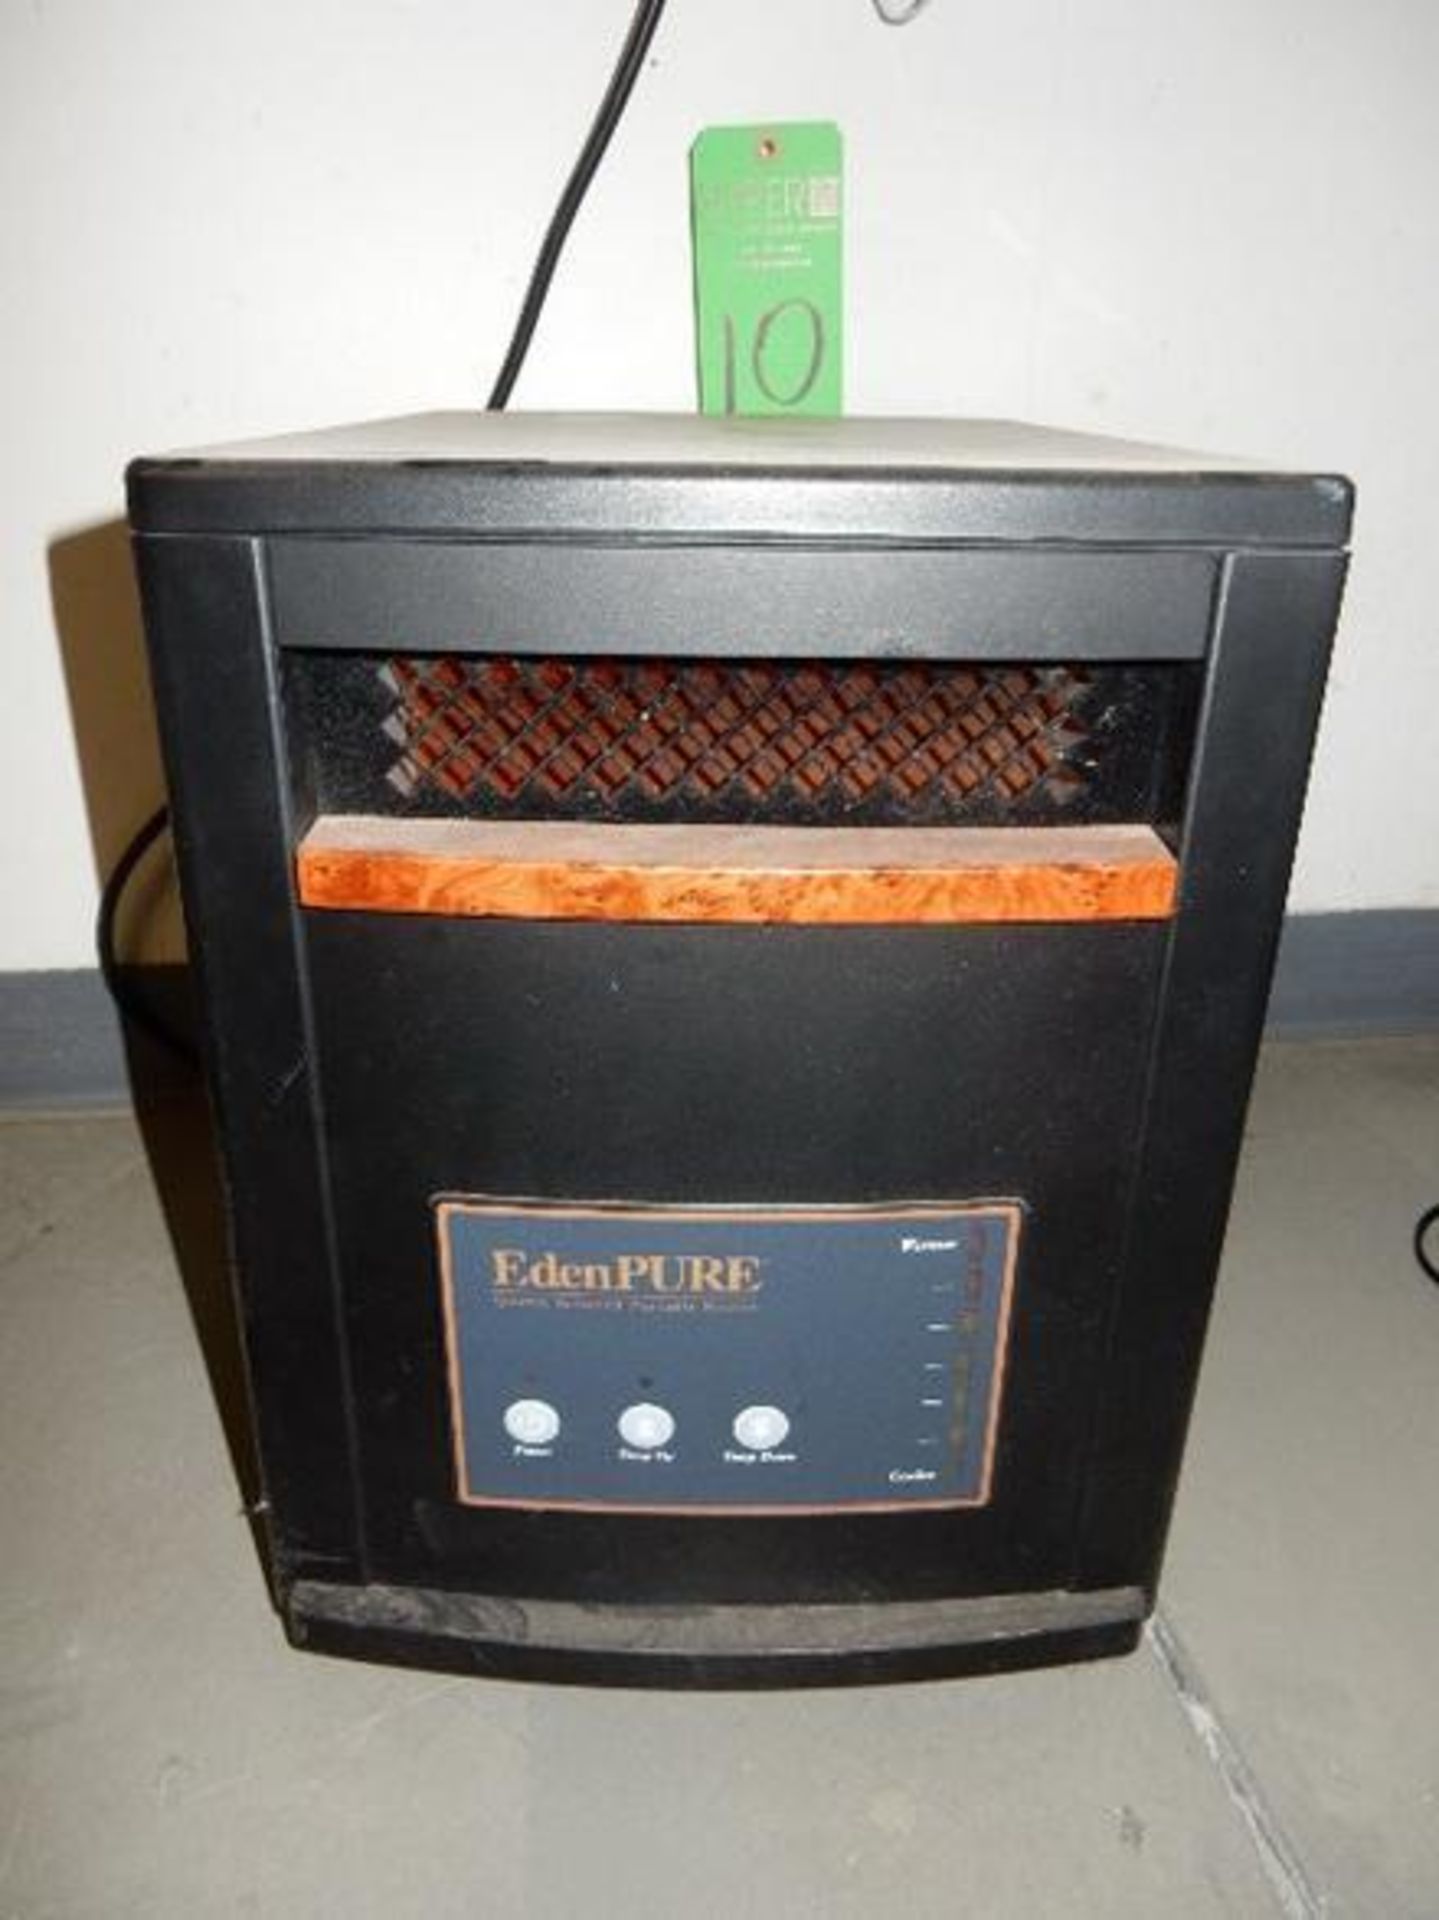 EdenPURE Copper Model: SMART1000XL Electric Infrared Quartz Heater